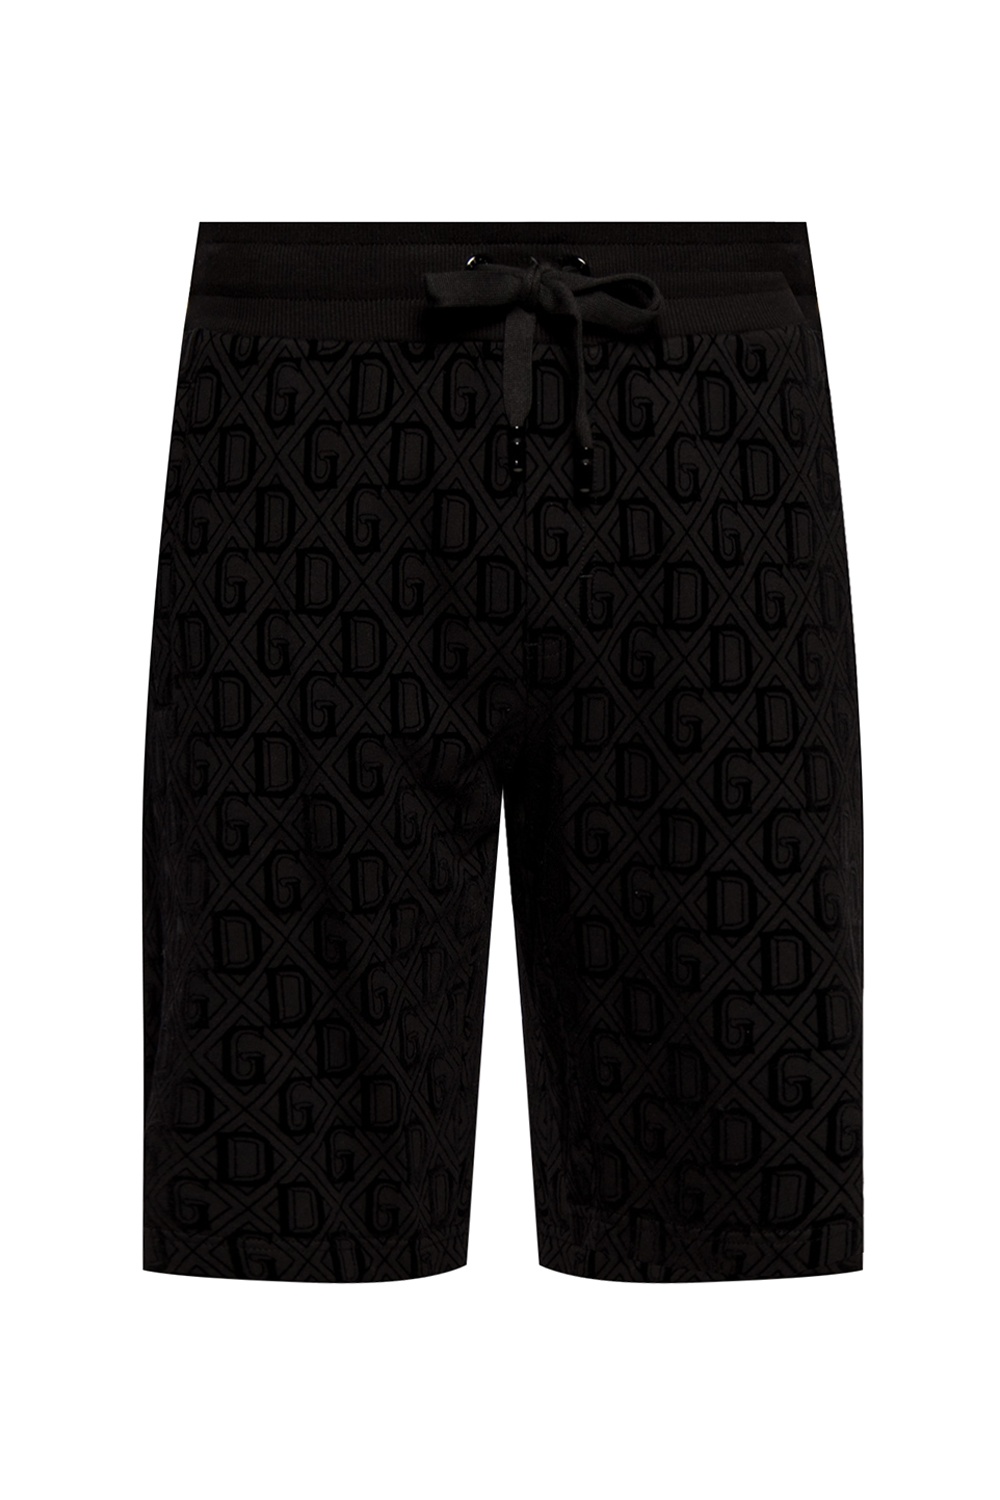 Dolce & Gabbana Shorts with logo | Men's Clothing | Vitkac